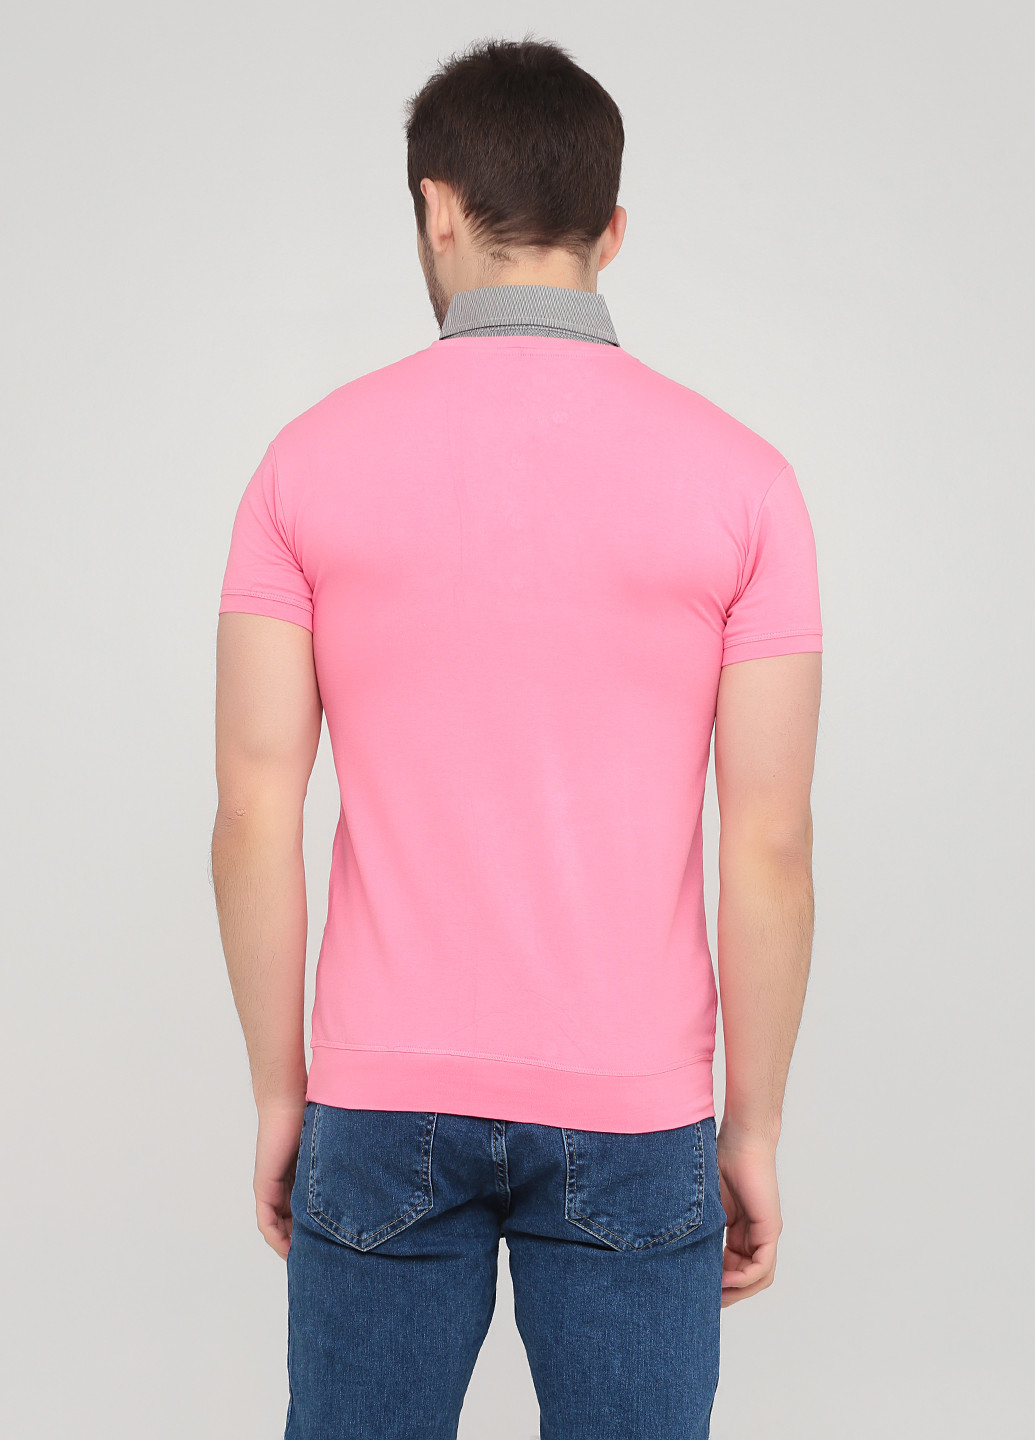 Розовая футболка-поло для мужчин Baydo однотонная